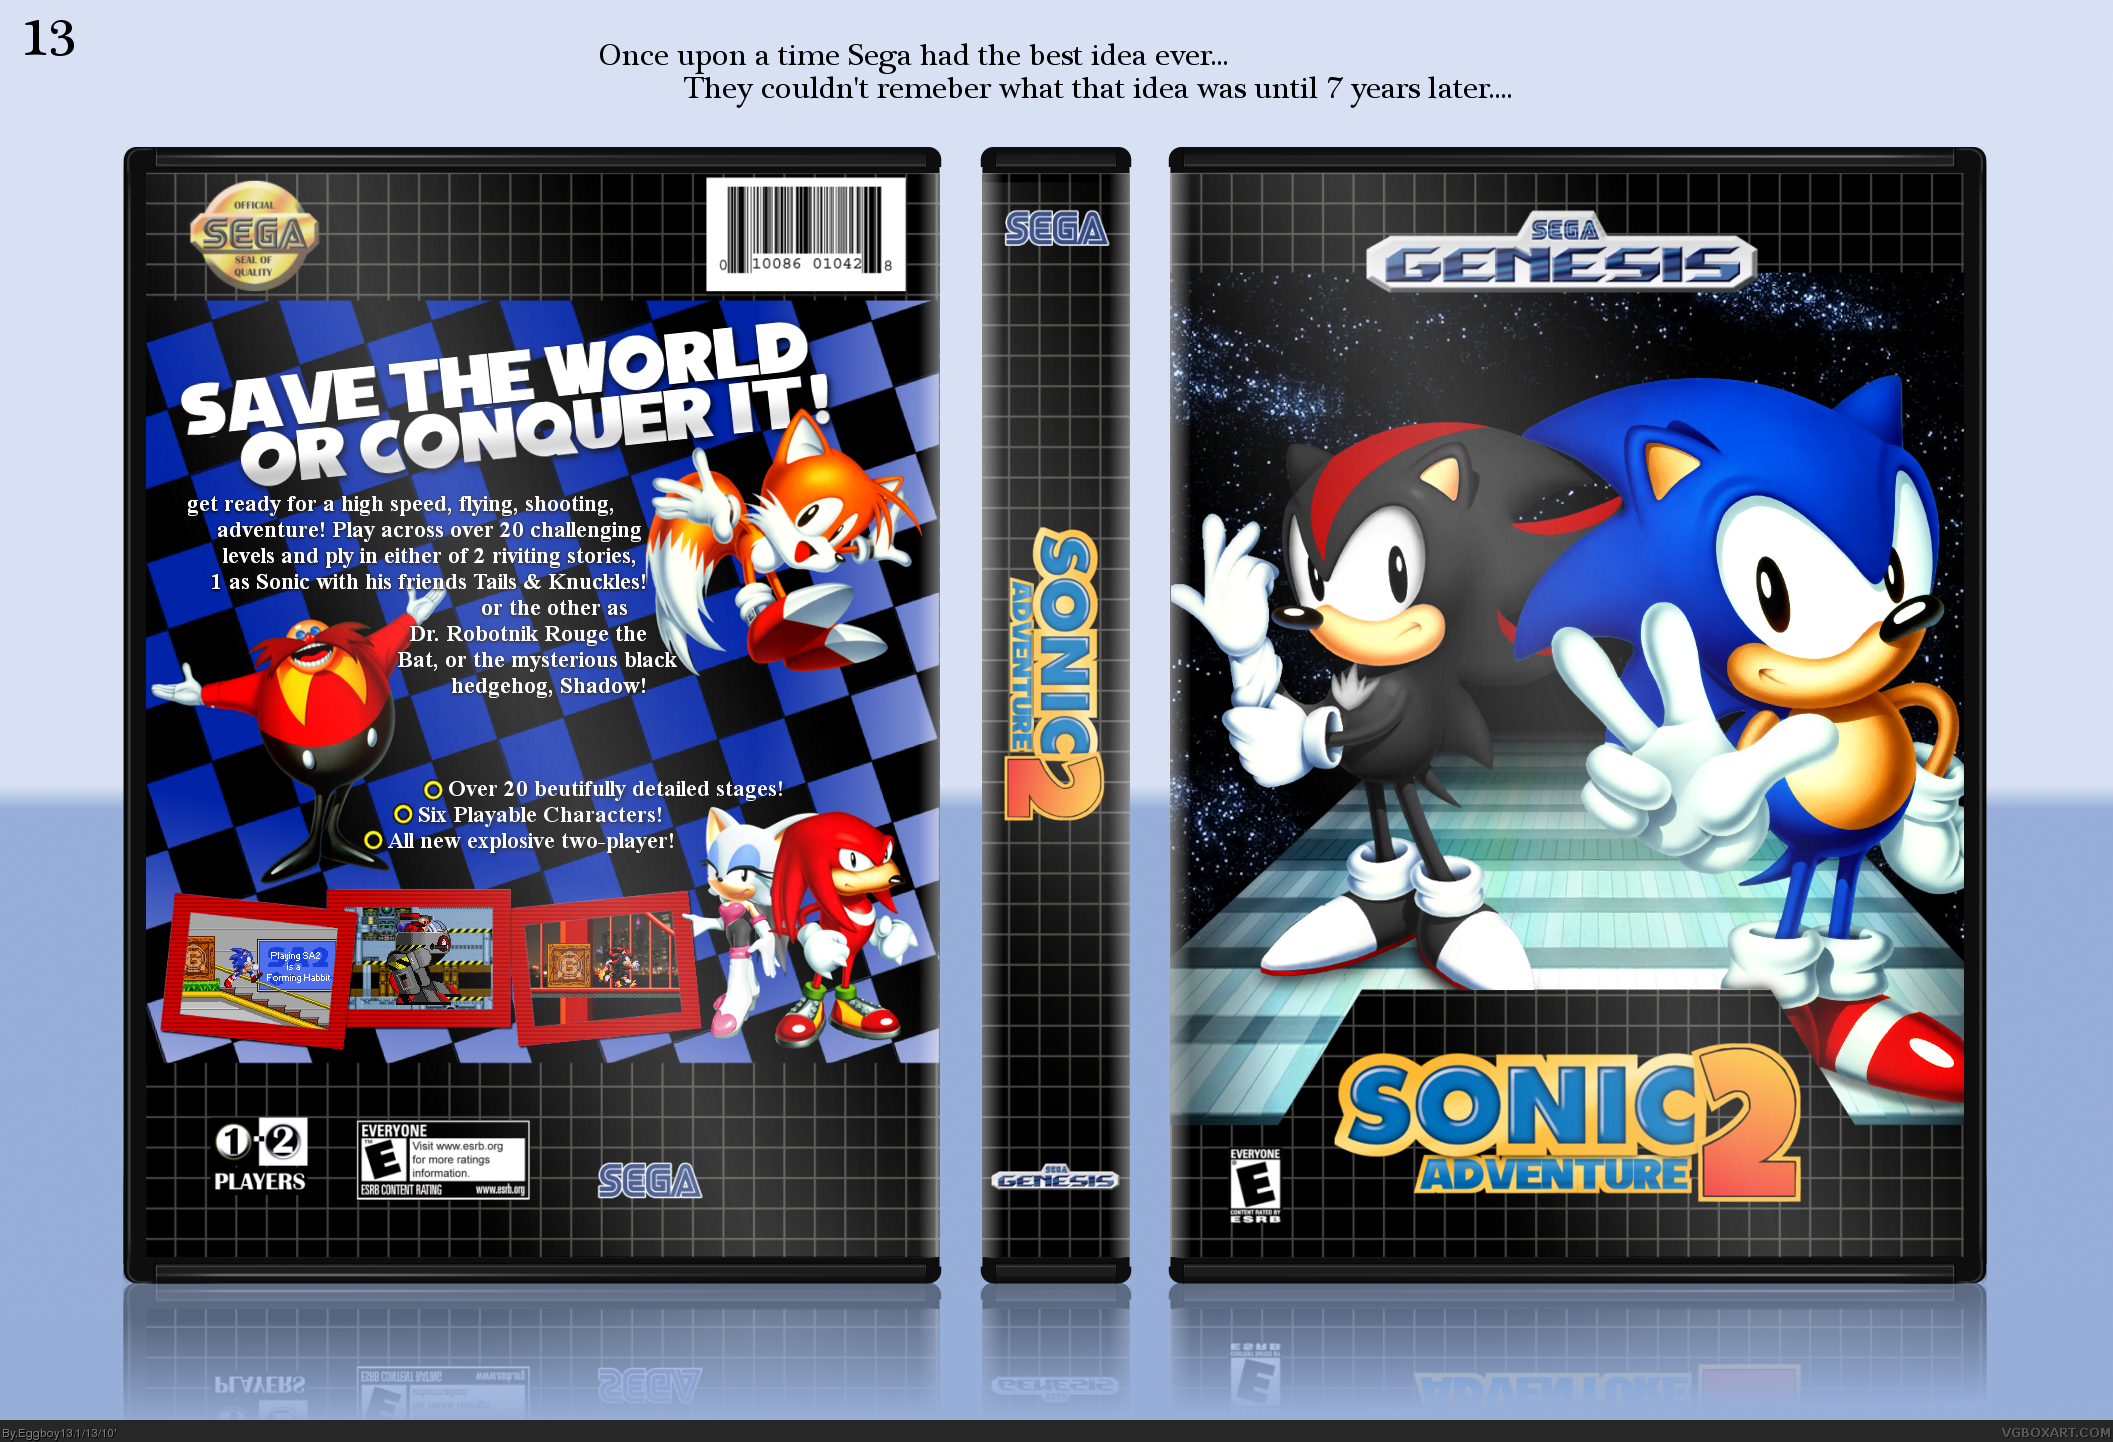 Sonic Adventure 2 Genesis Box Art Cover by Eggboy'13